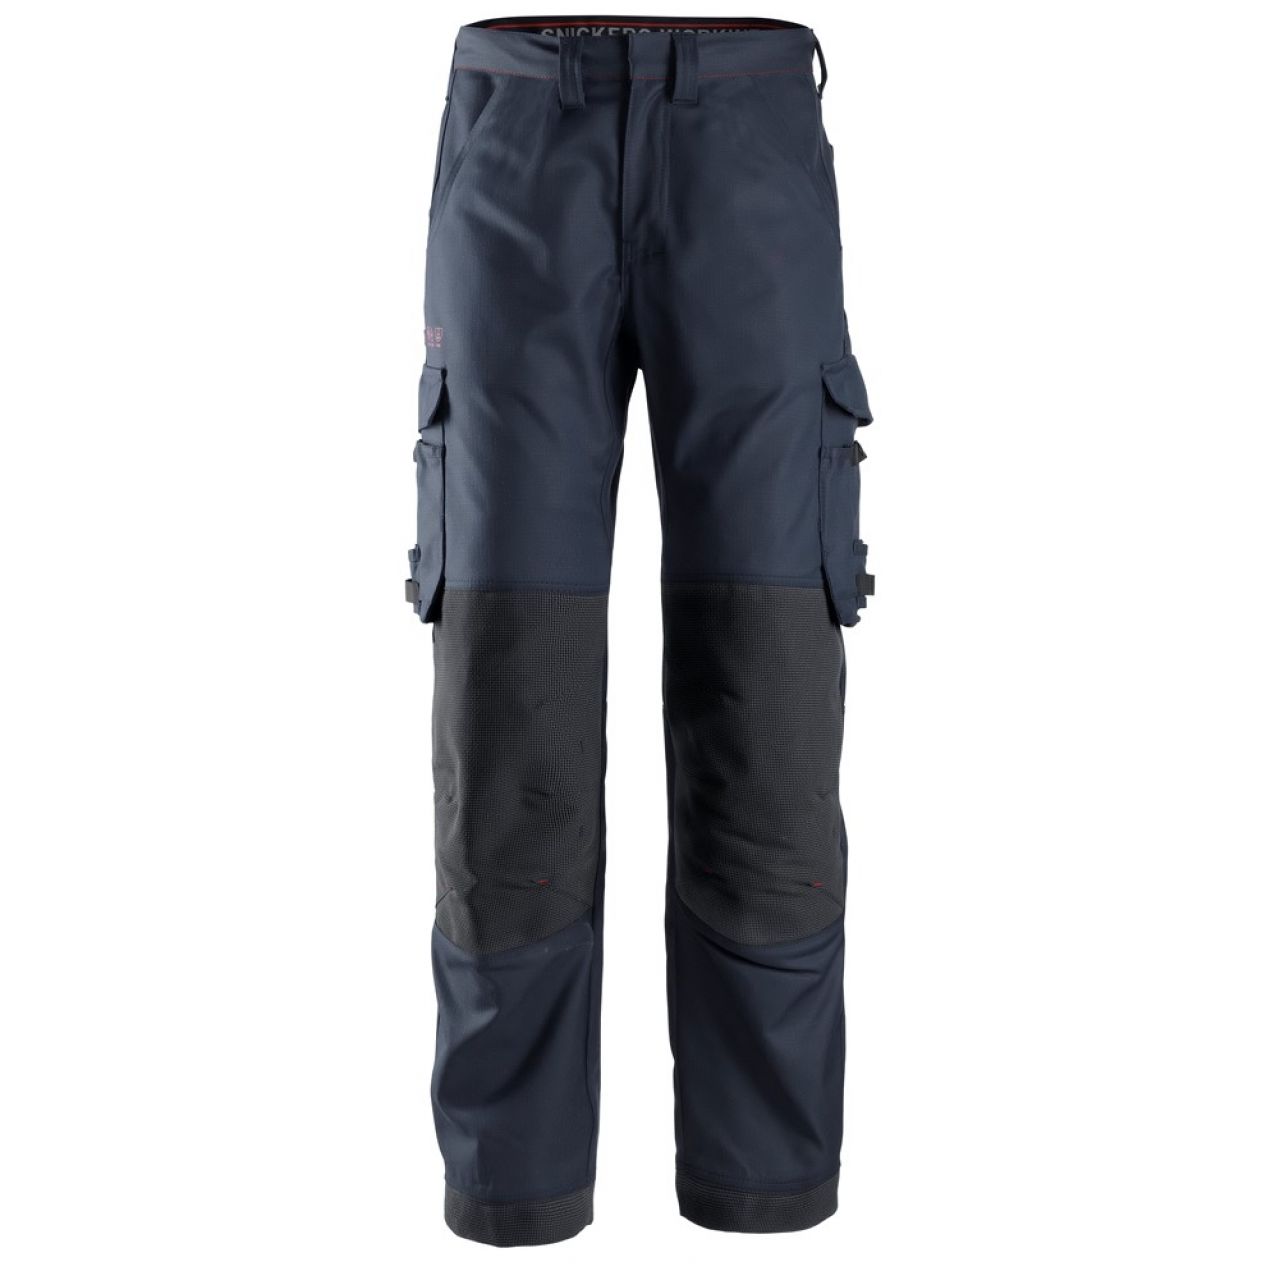 6362 Pantalones largos de trabajo con bolsillos simétricos ProtecWork azul marino talla 54